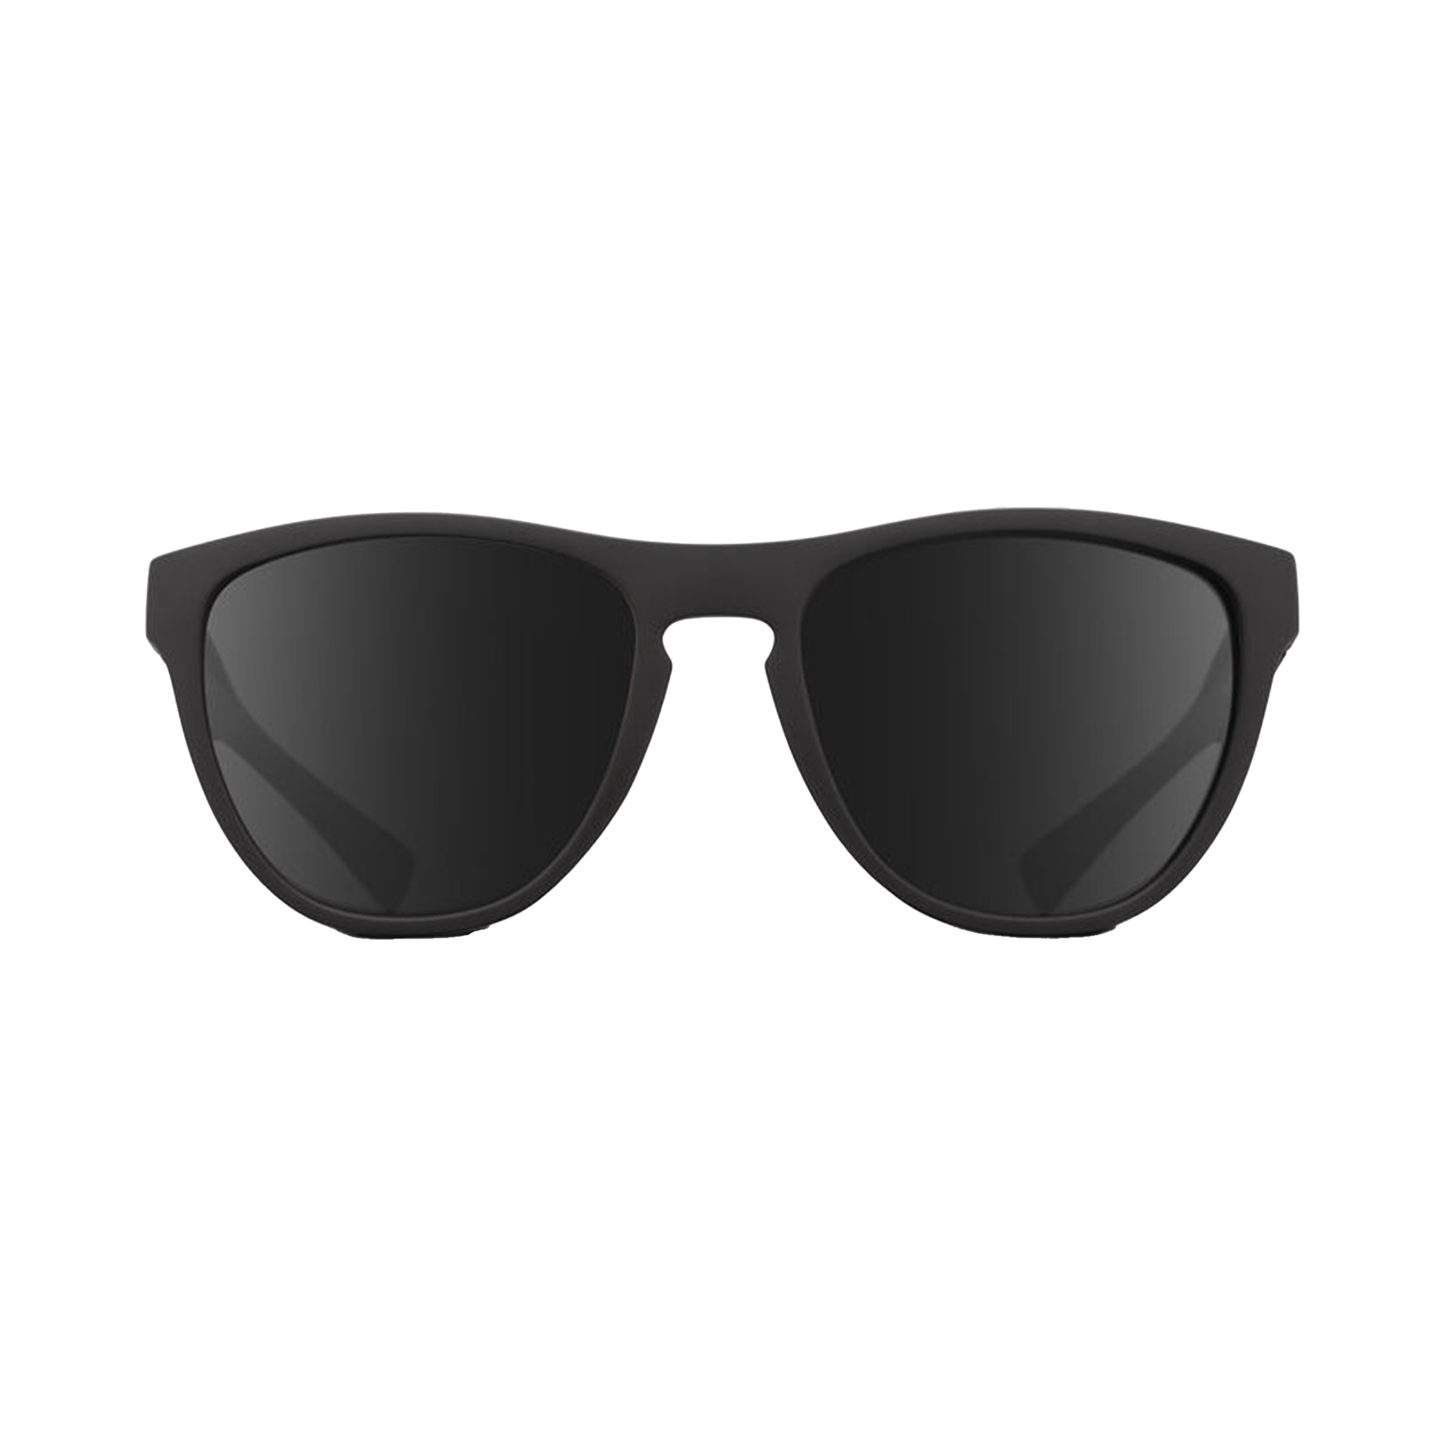 Giro Mills Sunglasses Matte Black Sunglasses